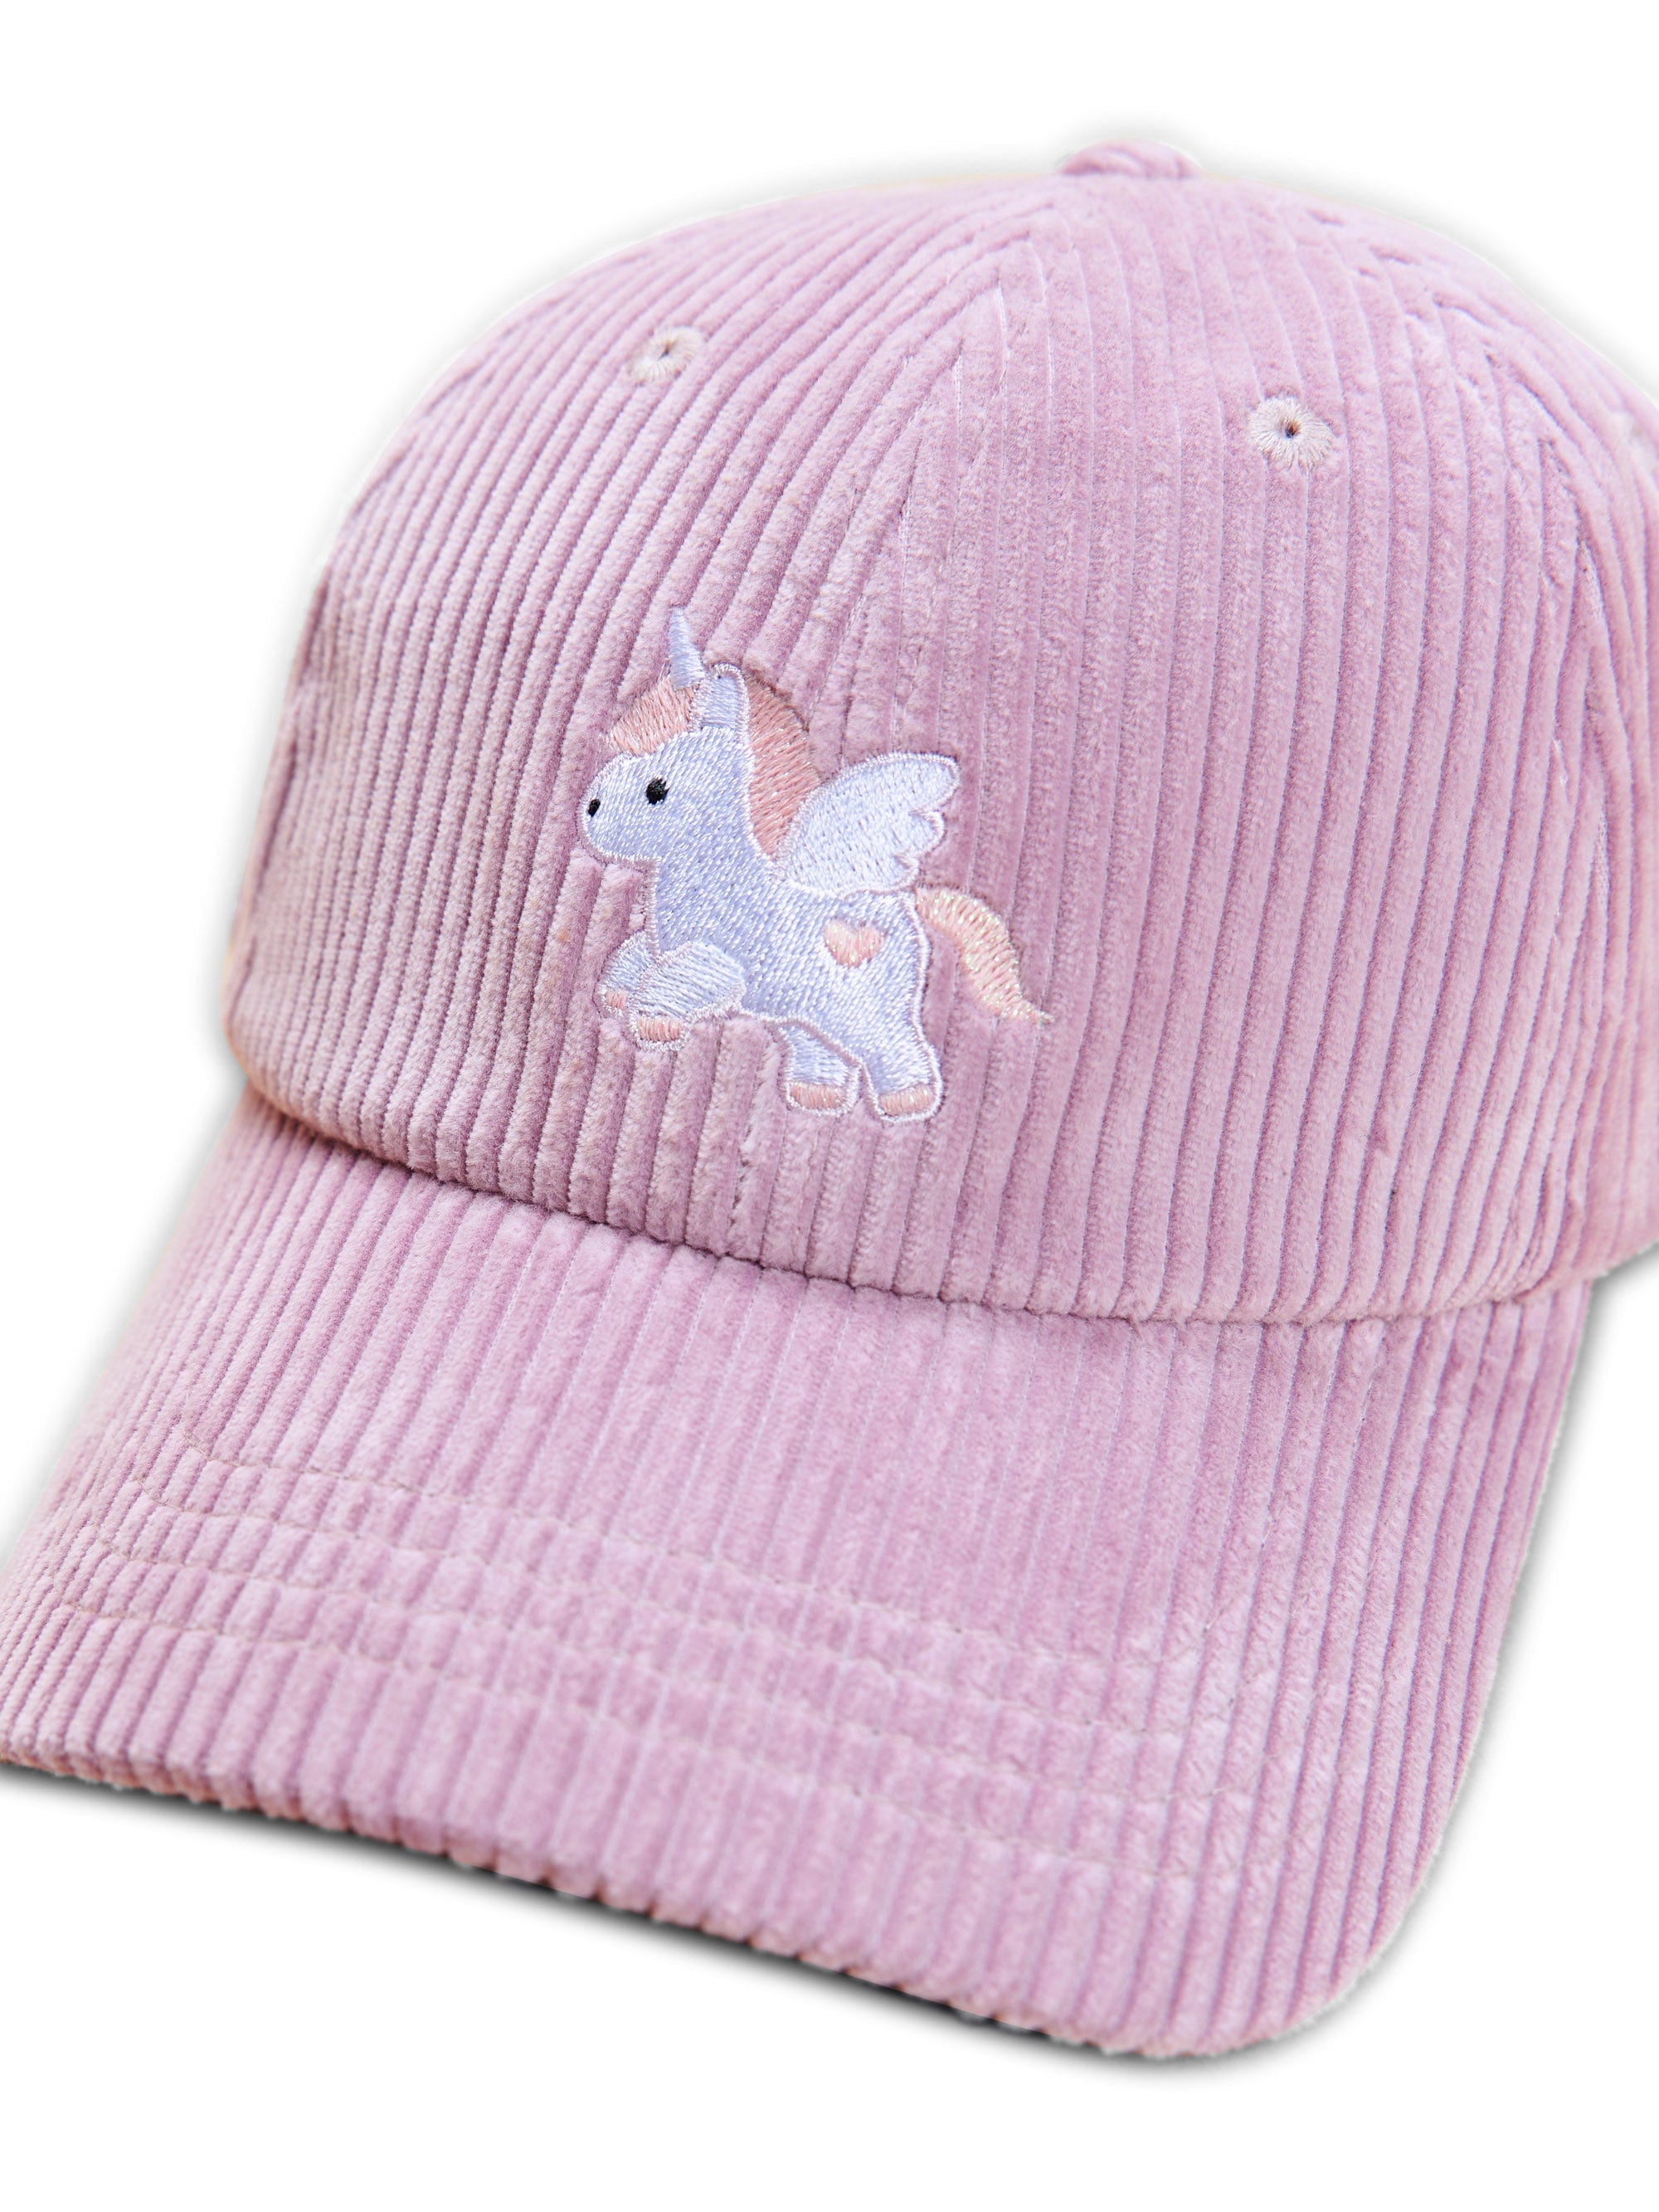 Huxbaby Accessories Hats Unicorn Cap